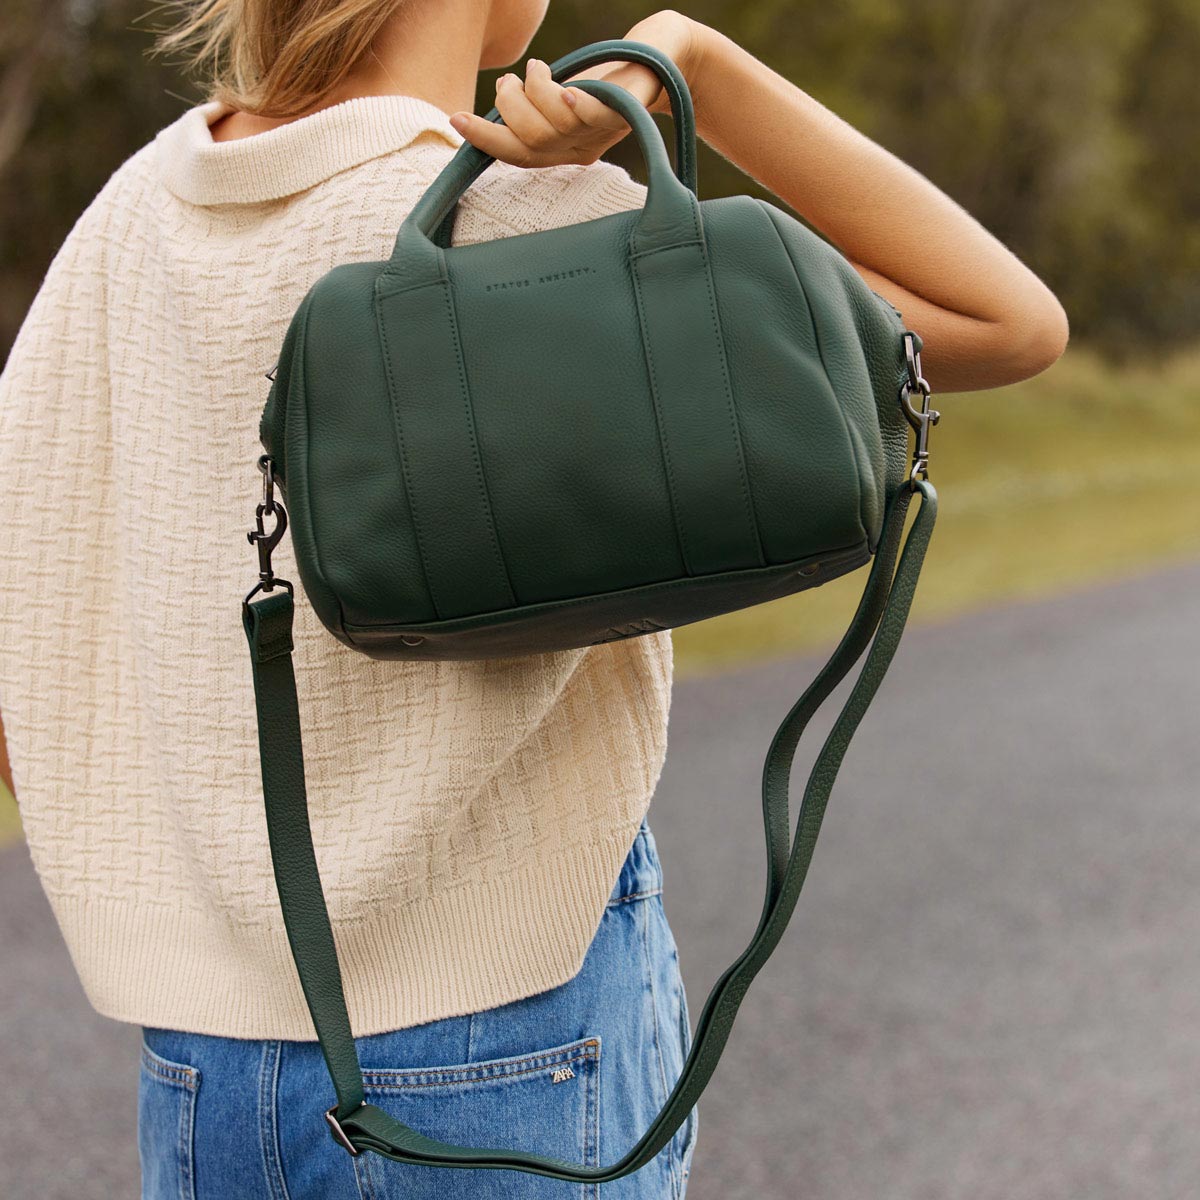 ASP - Duffle Bag | Bags, Duffle bag, Duffle